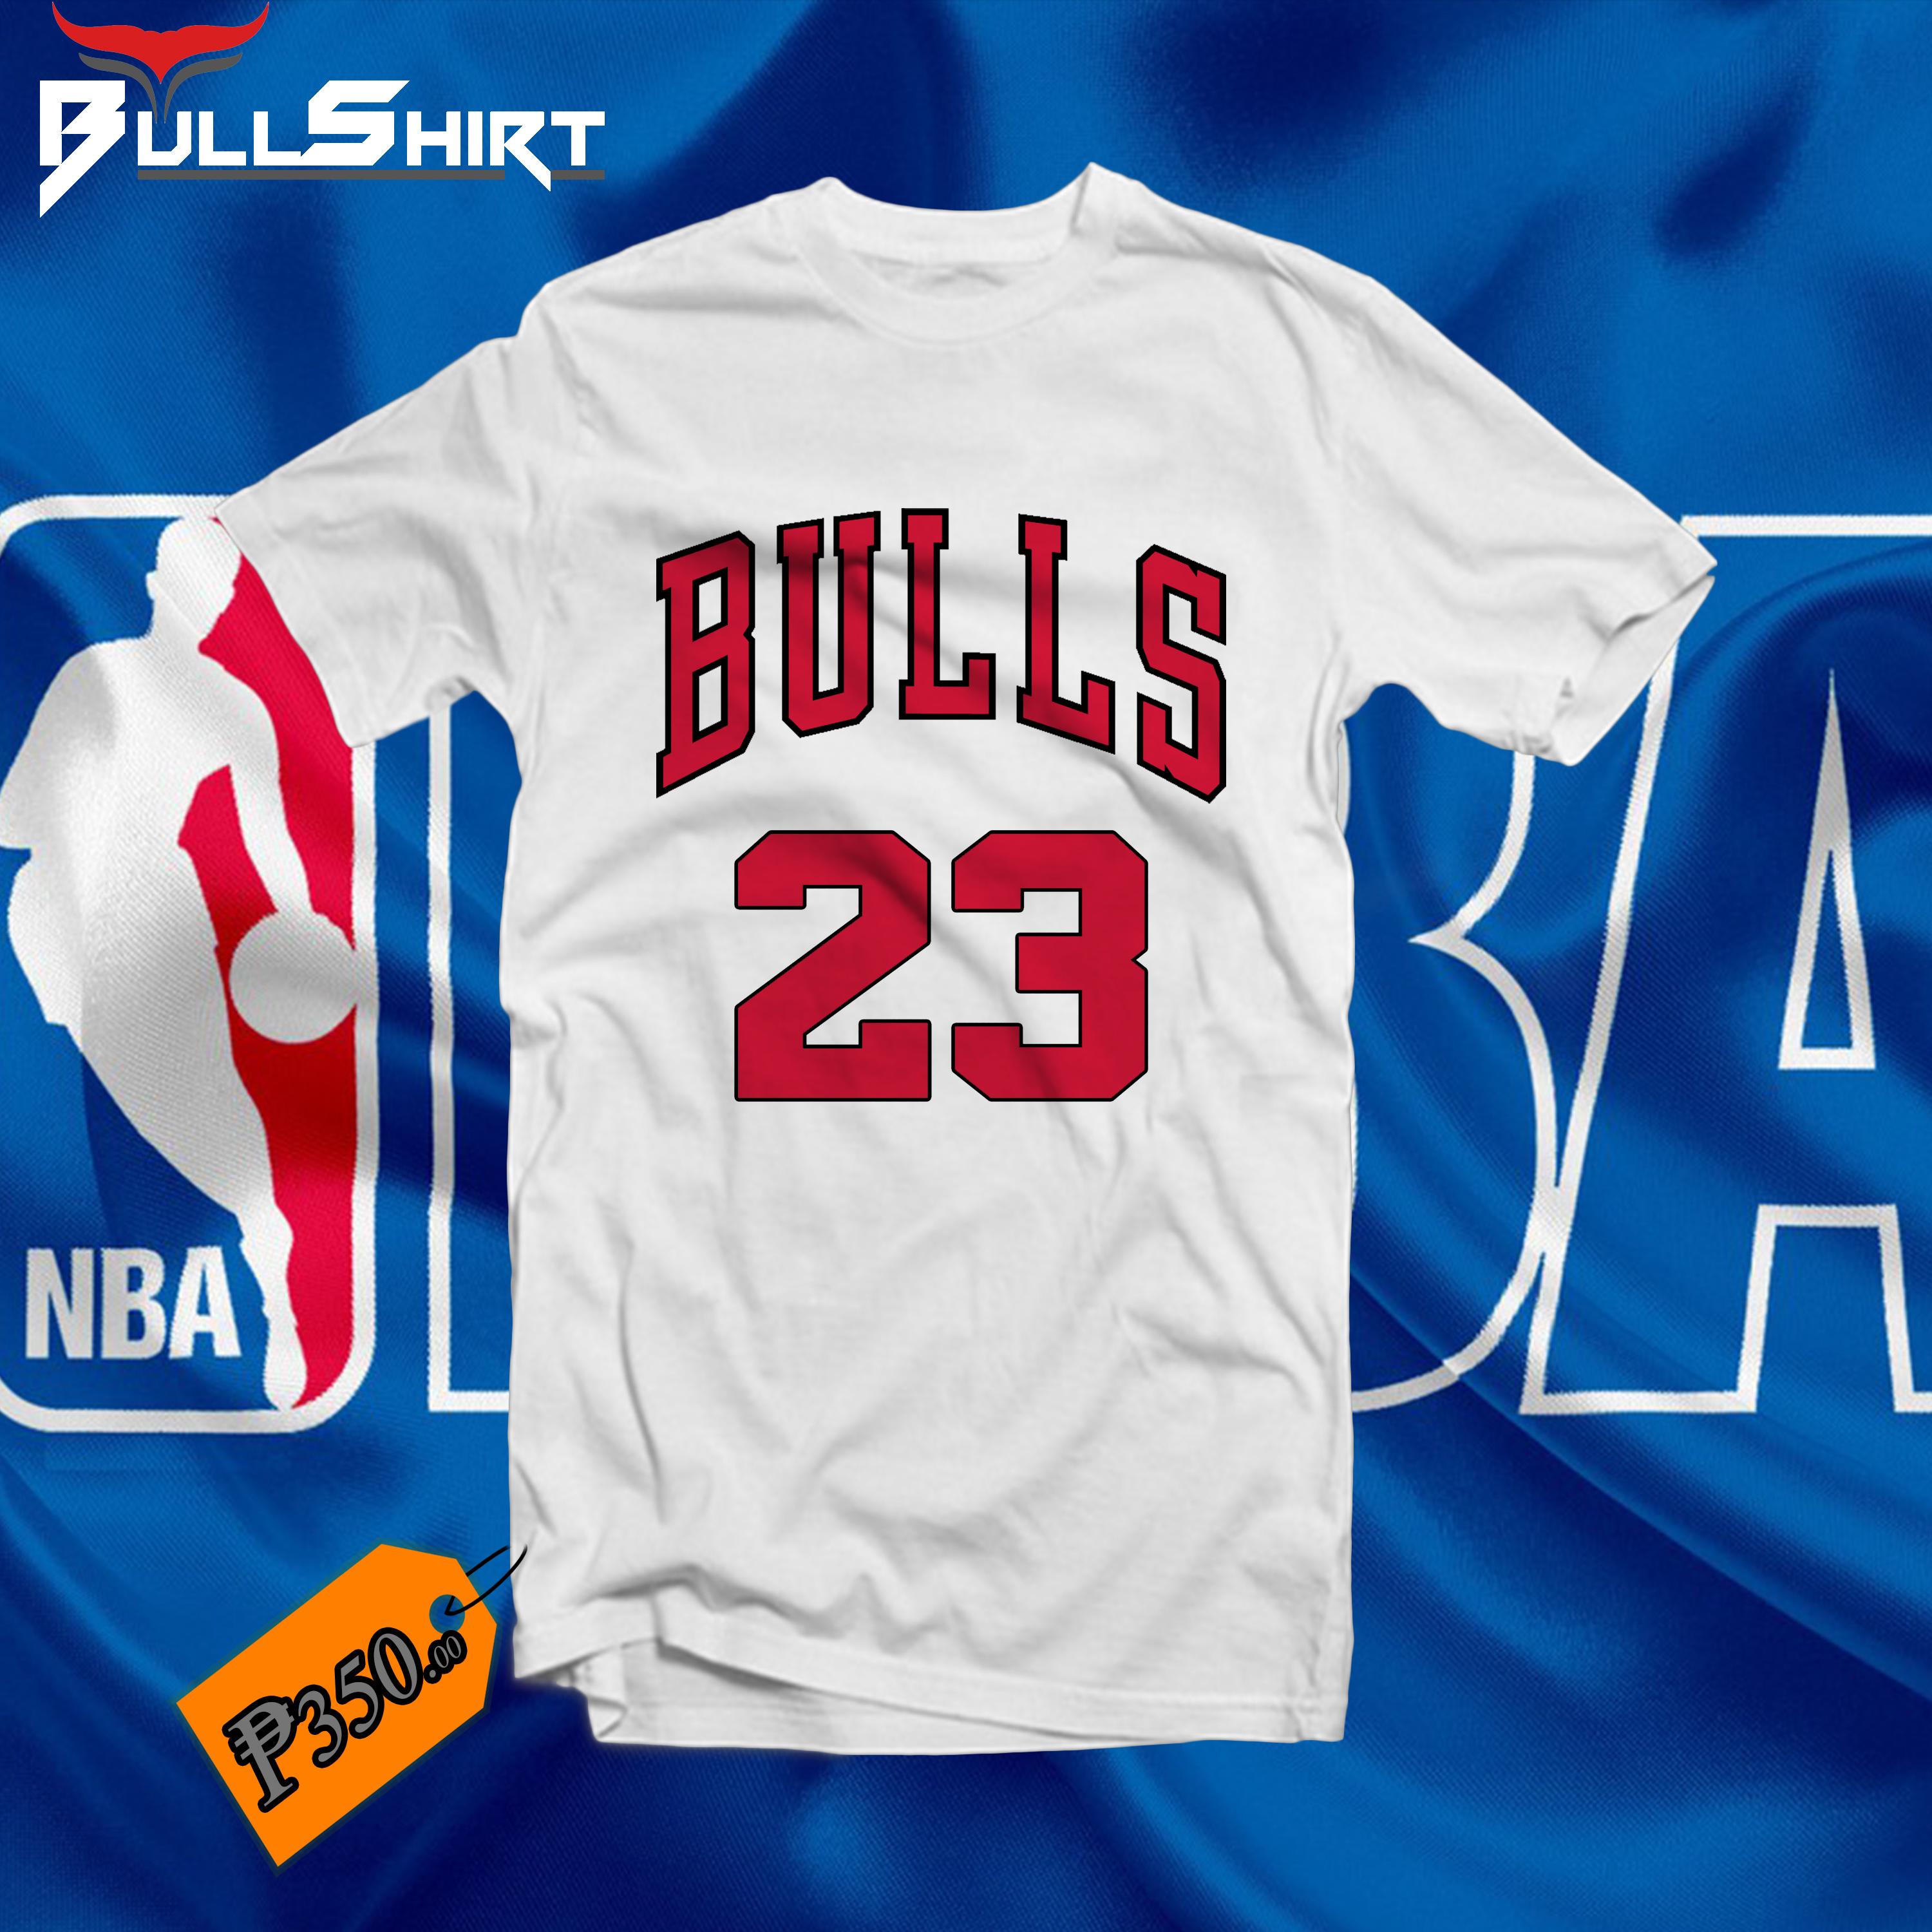 bulls nba shirt